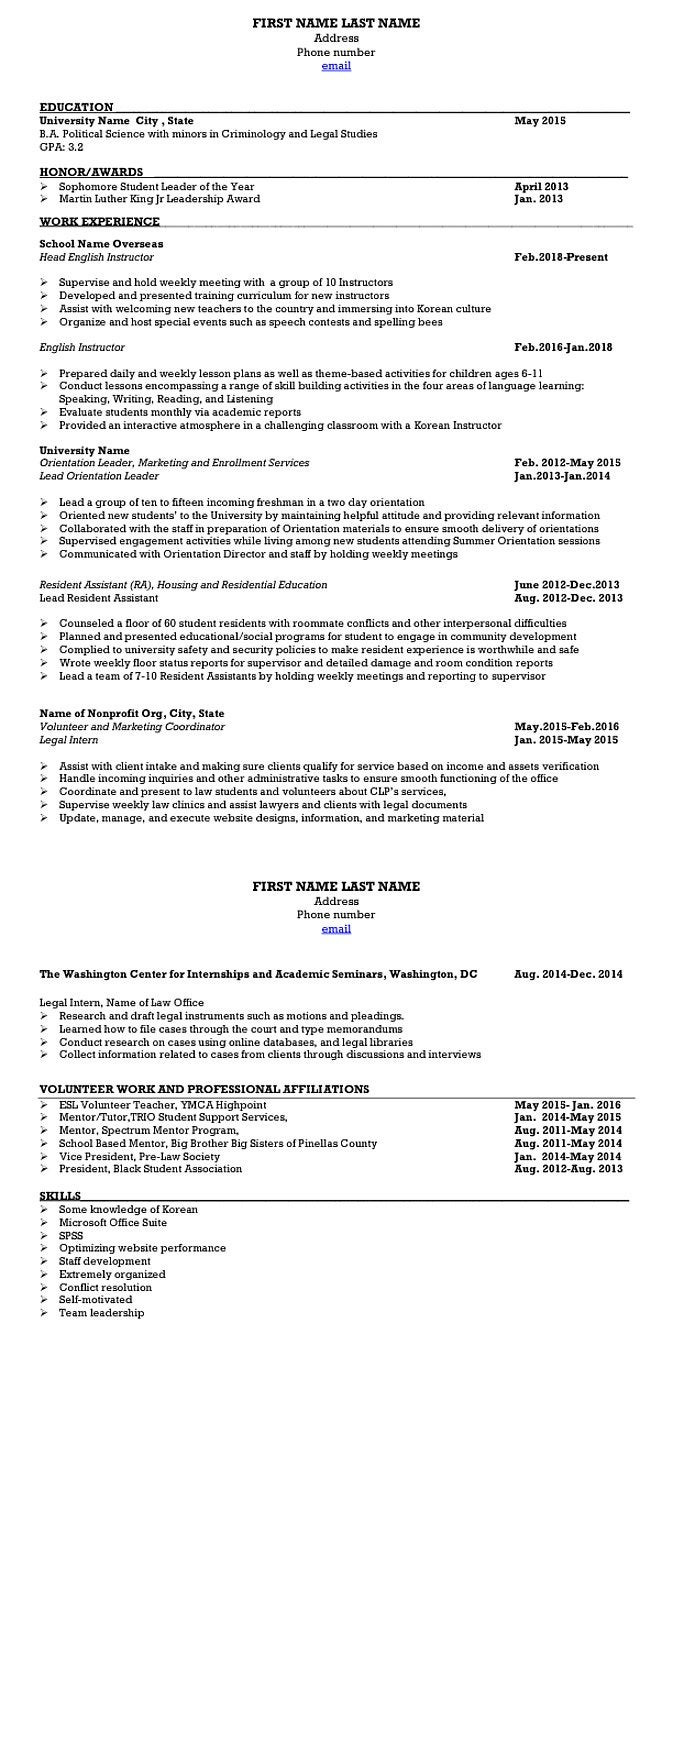 Academic Resume Template for Graduate School Applying to Graduate School Please Help with Resume : R/resumes